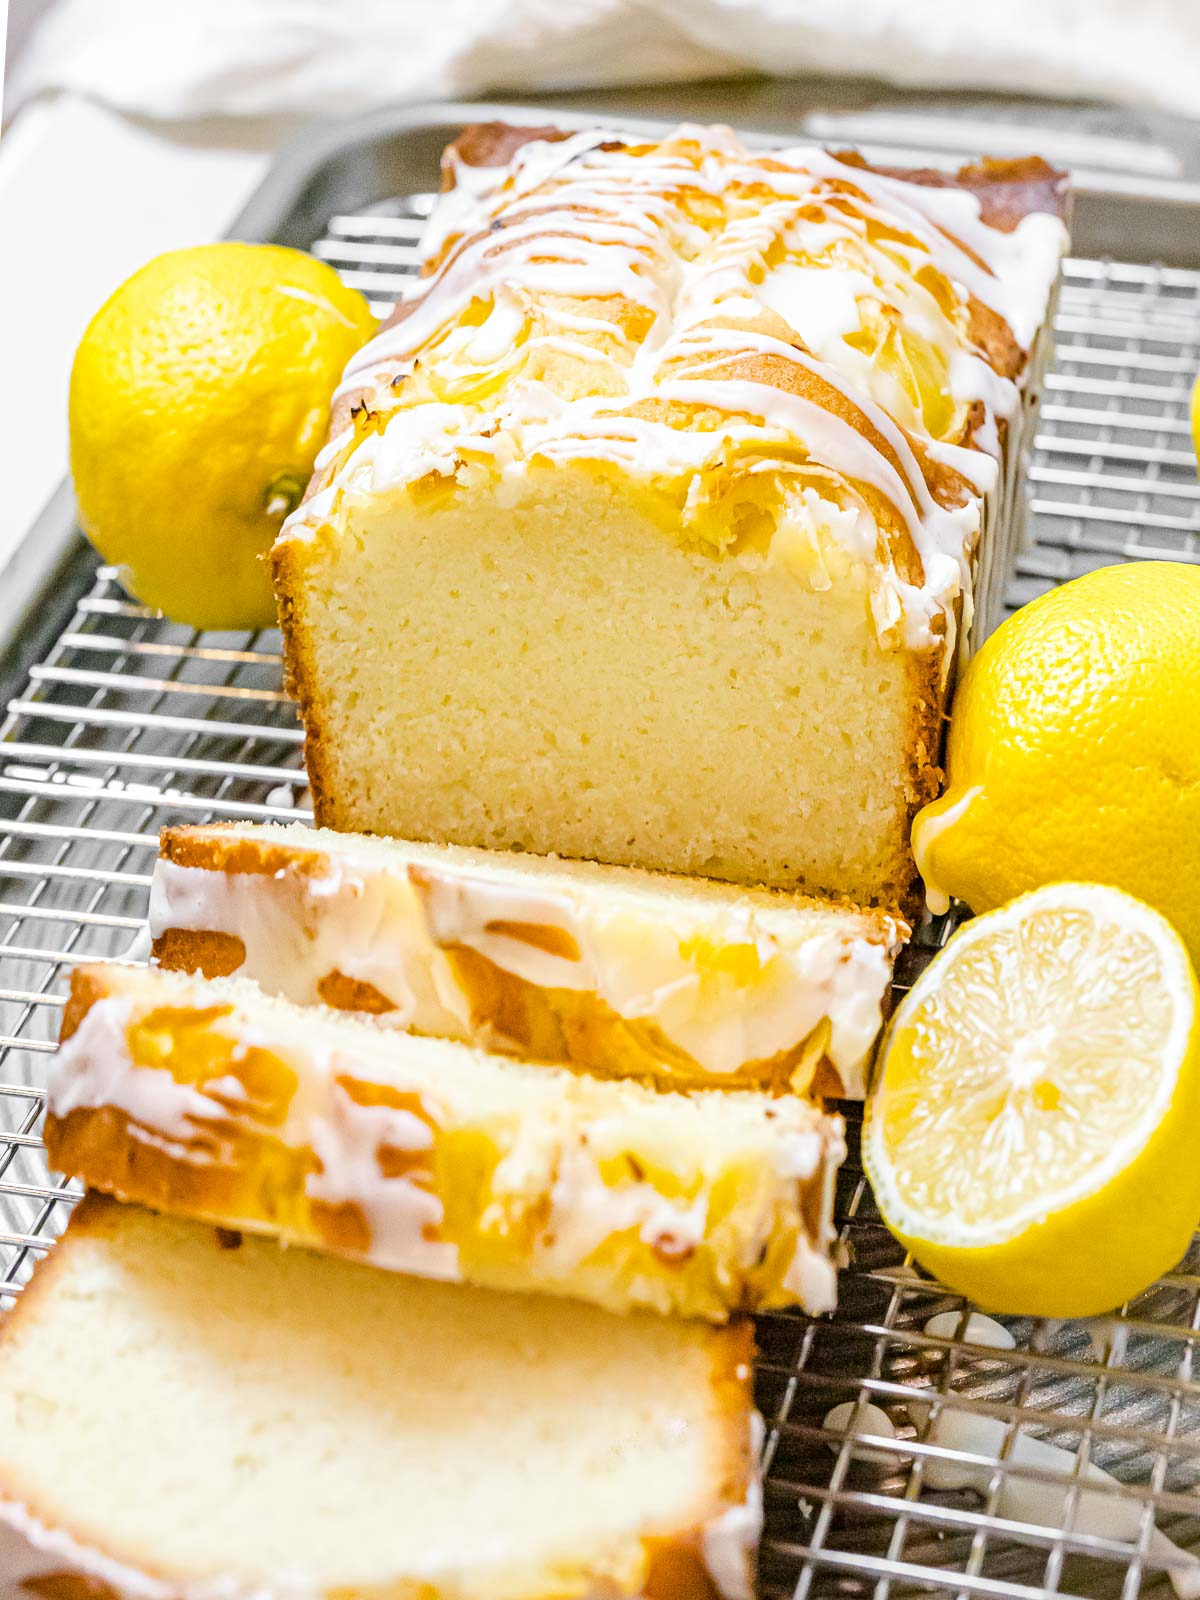 moist lemon pound cake glazed with icing sliced open on a metal rack next to lemons